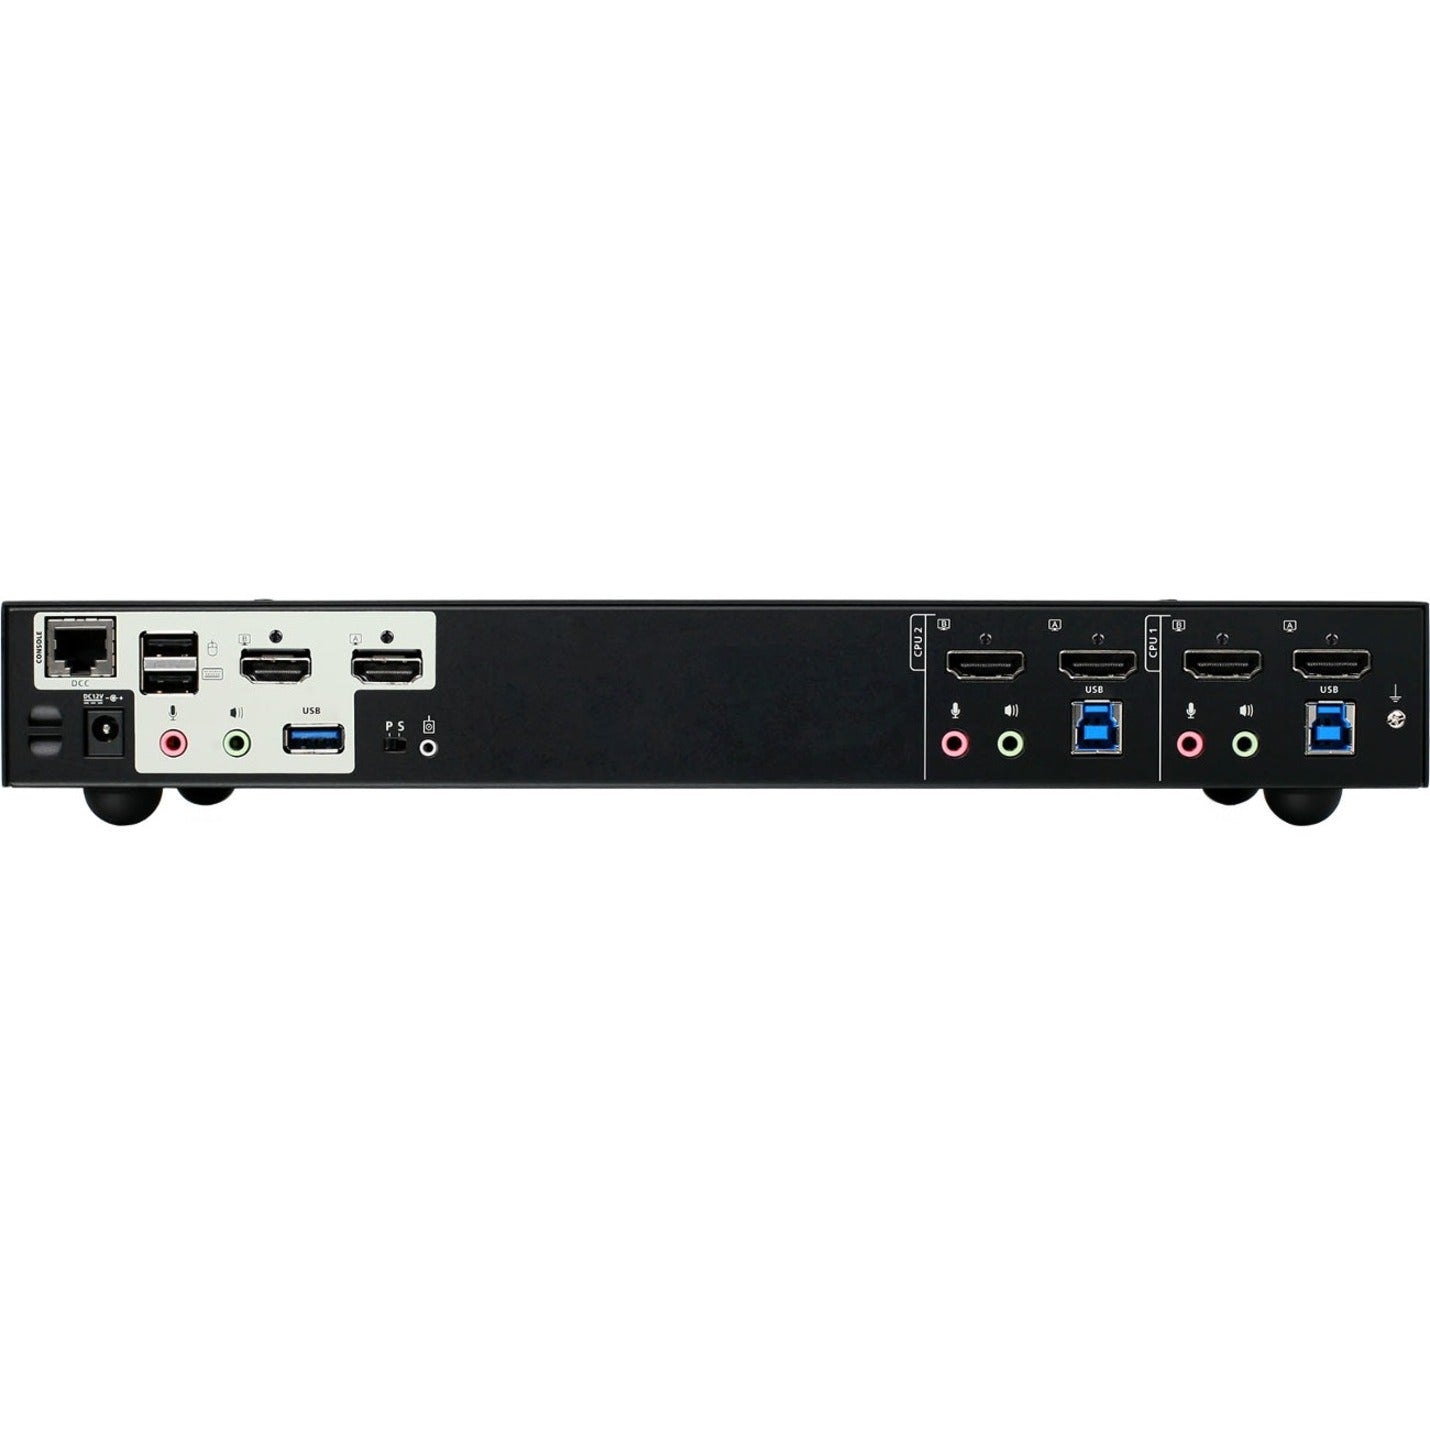 IOGEAR GCS1942H 2-Port 4K Dual View KVMP Switch with HDMI, USB 3.0 Hub and Audio - TAA Compliant